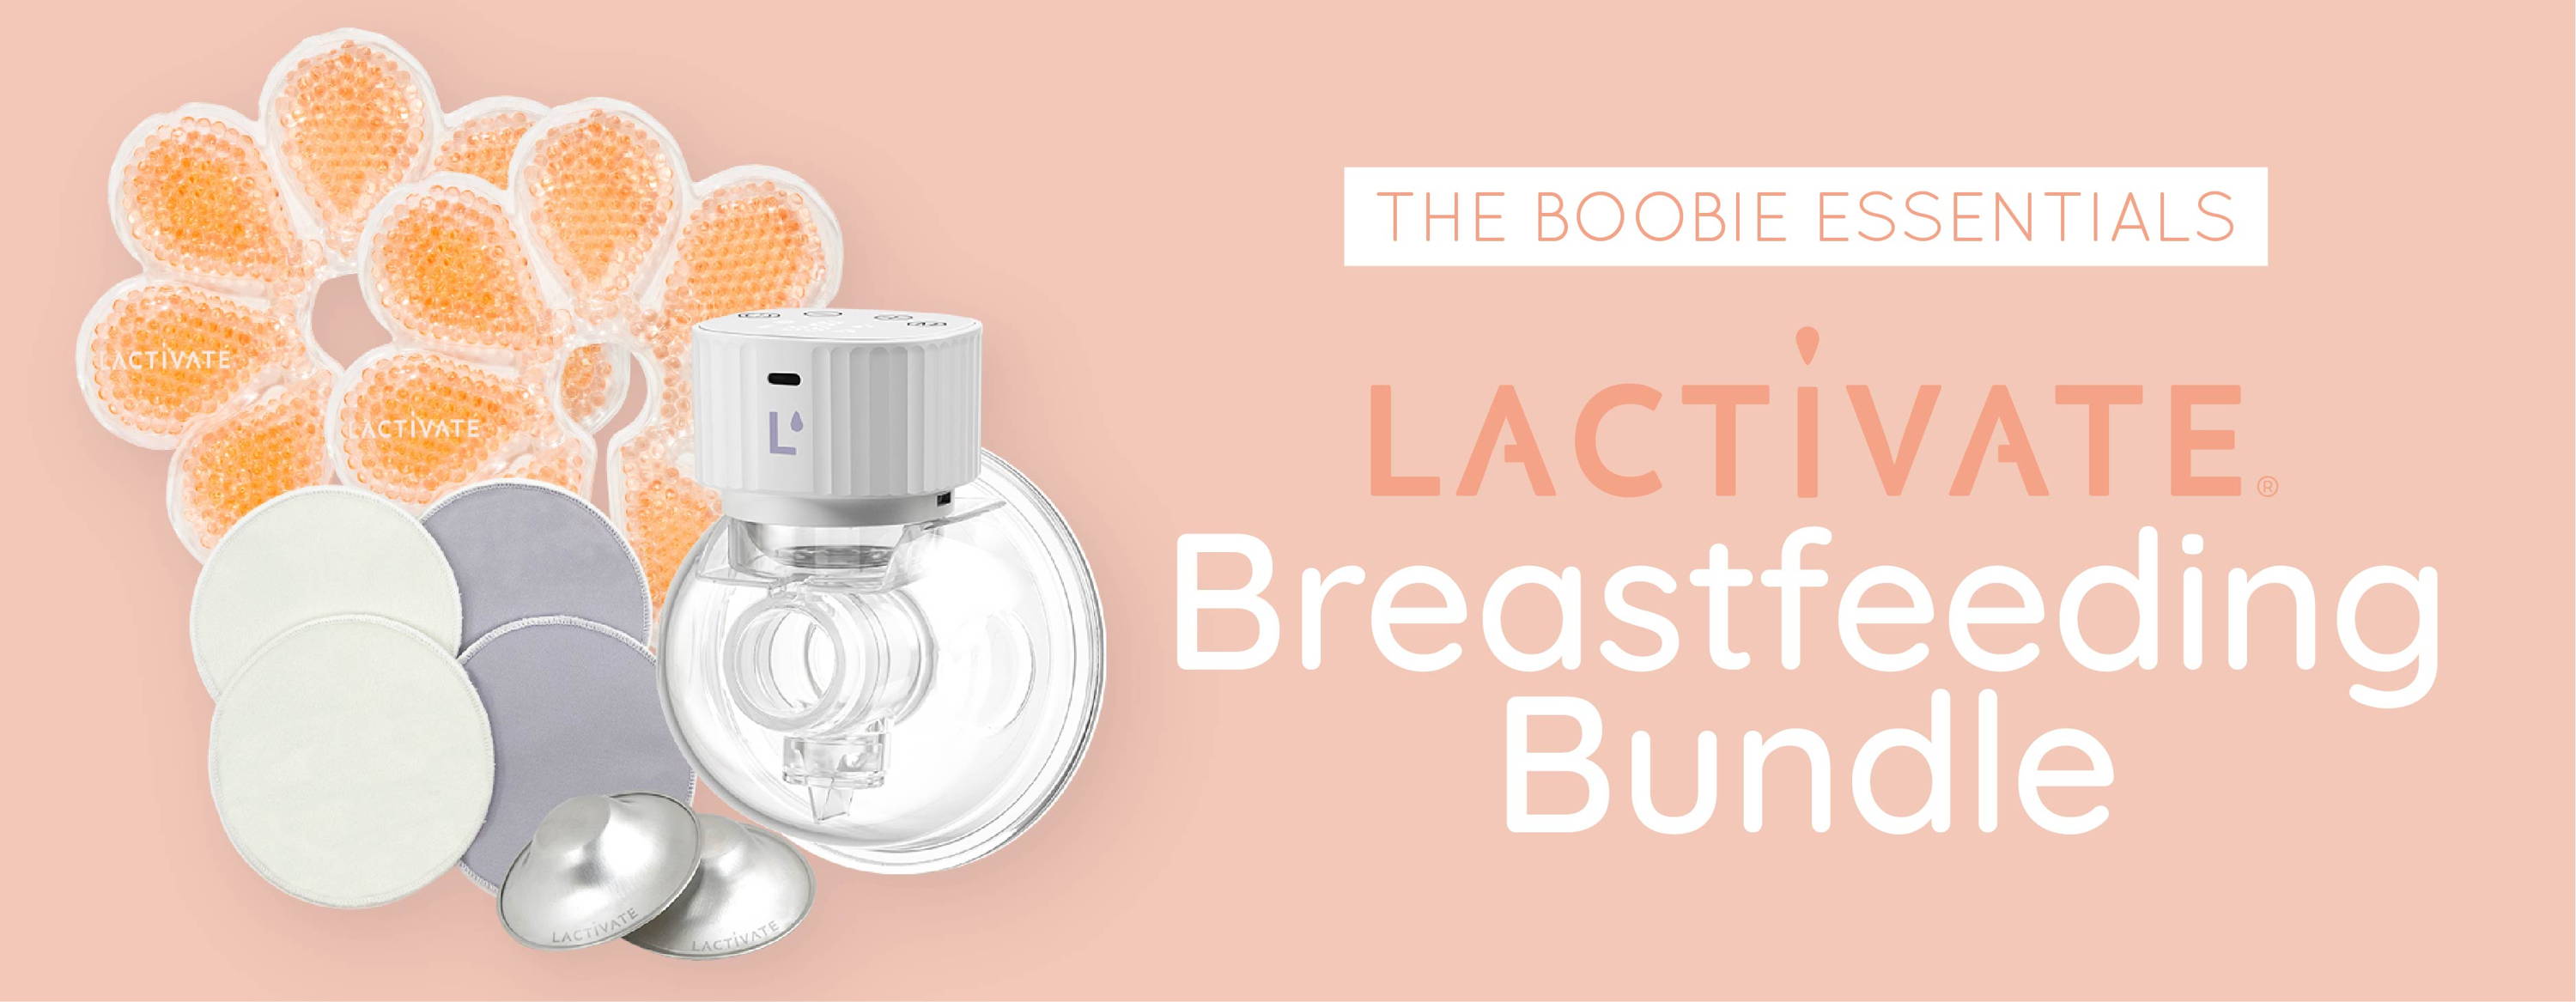 Lactivate Breastfeeding Bundle